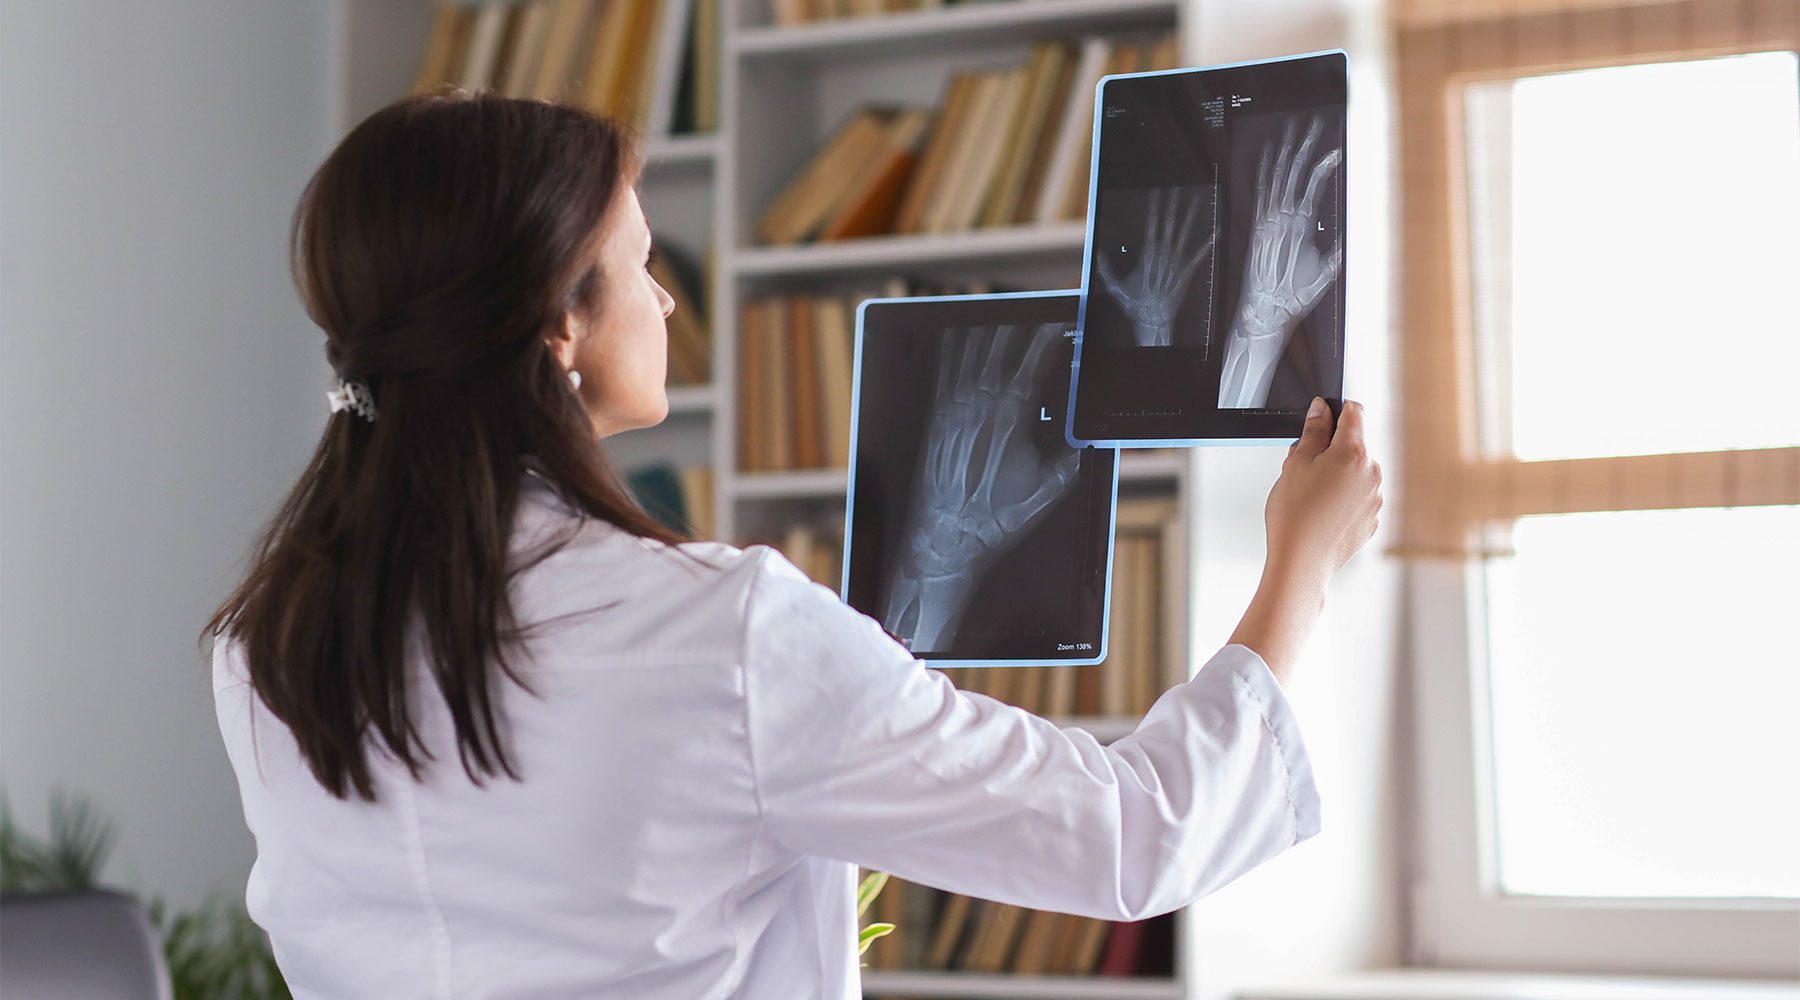 Doctora analizando dos radiografías para comprobar posible artrosis en manos.